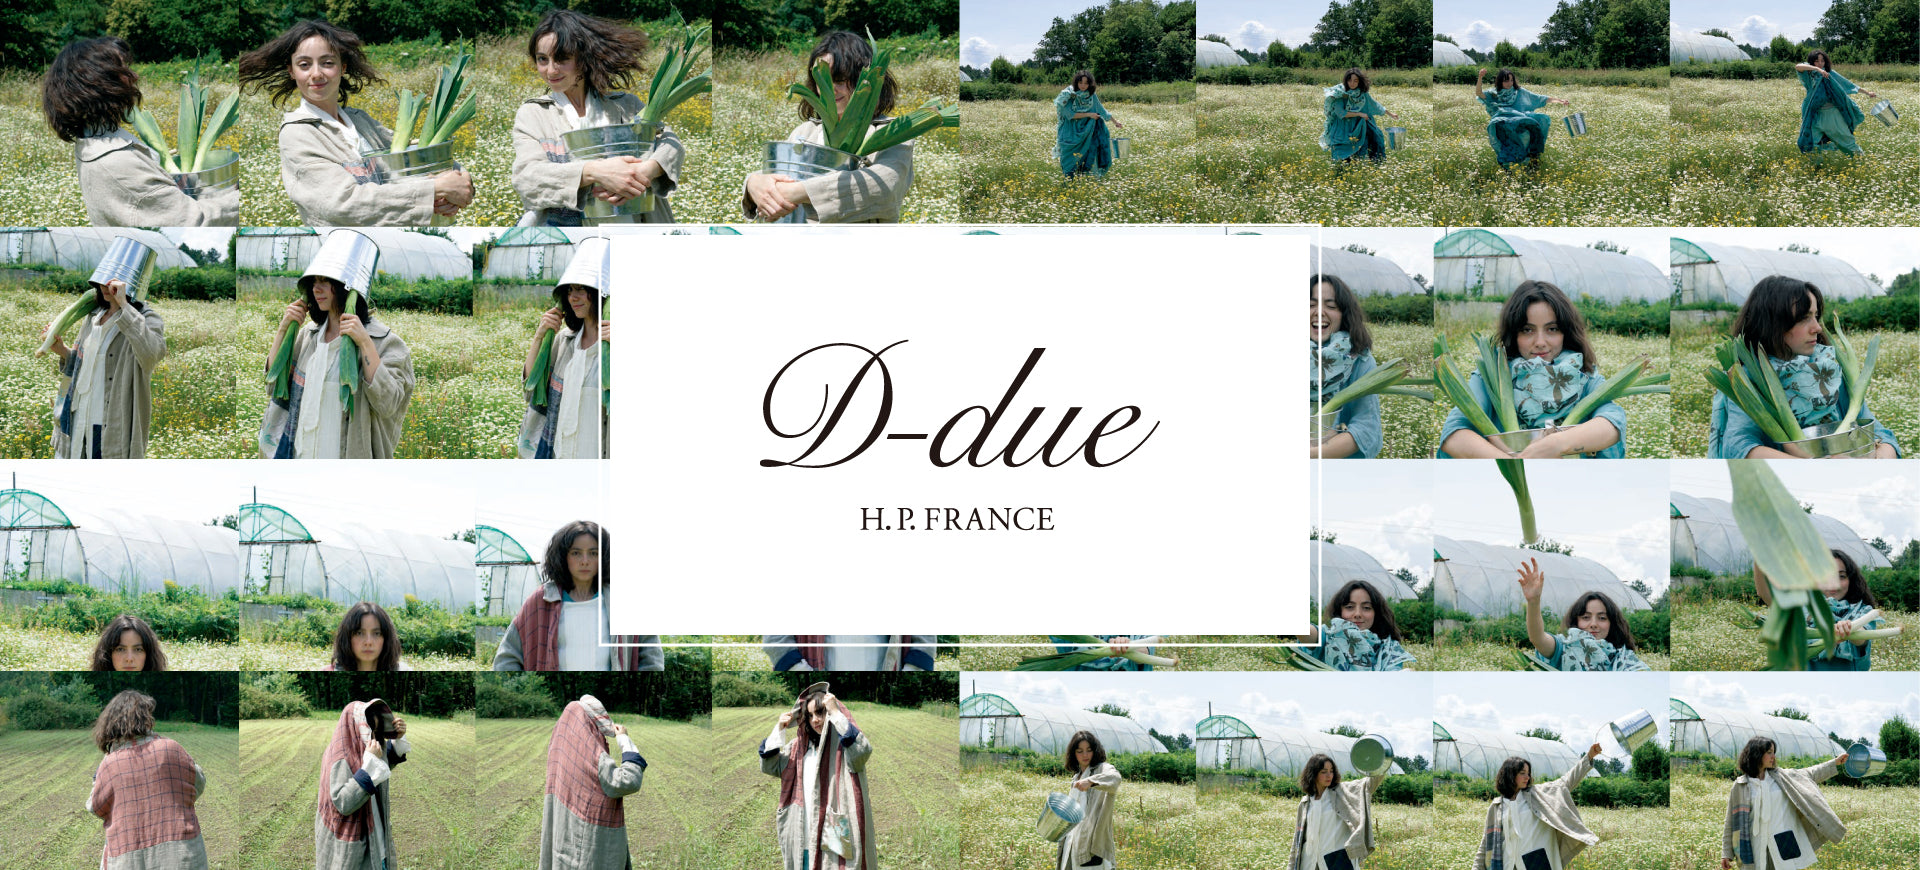 D-due H.P.FRANCE – H.P.FRANCE公式サイト